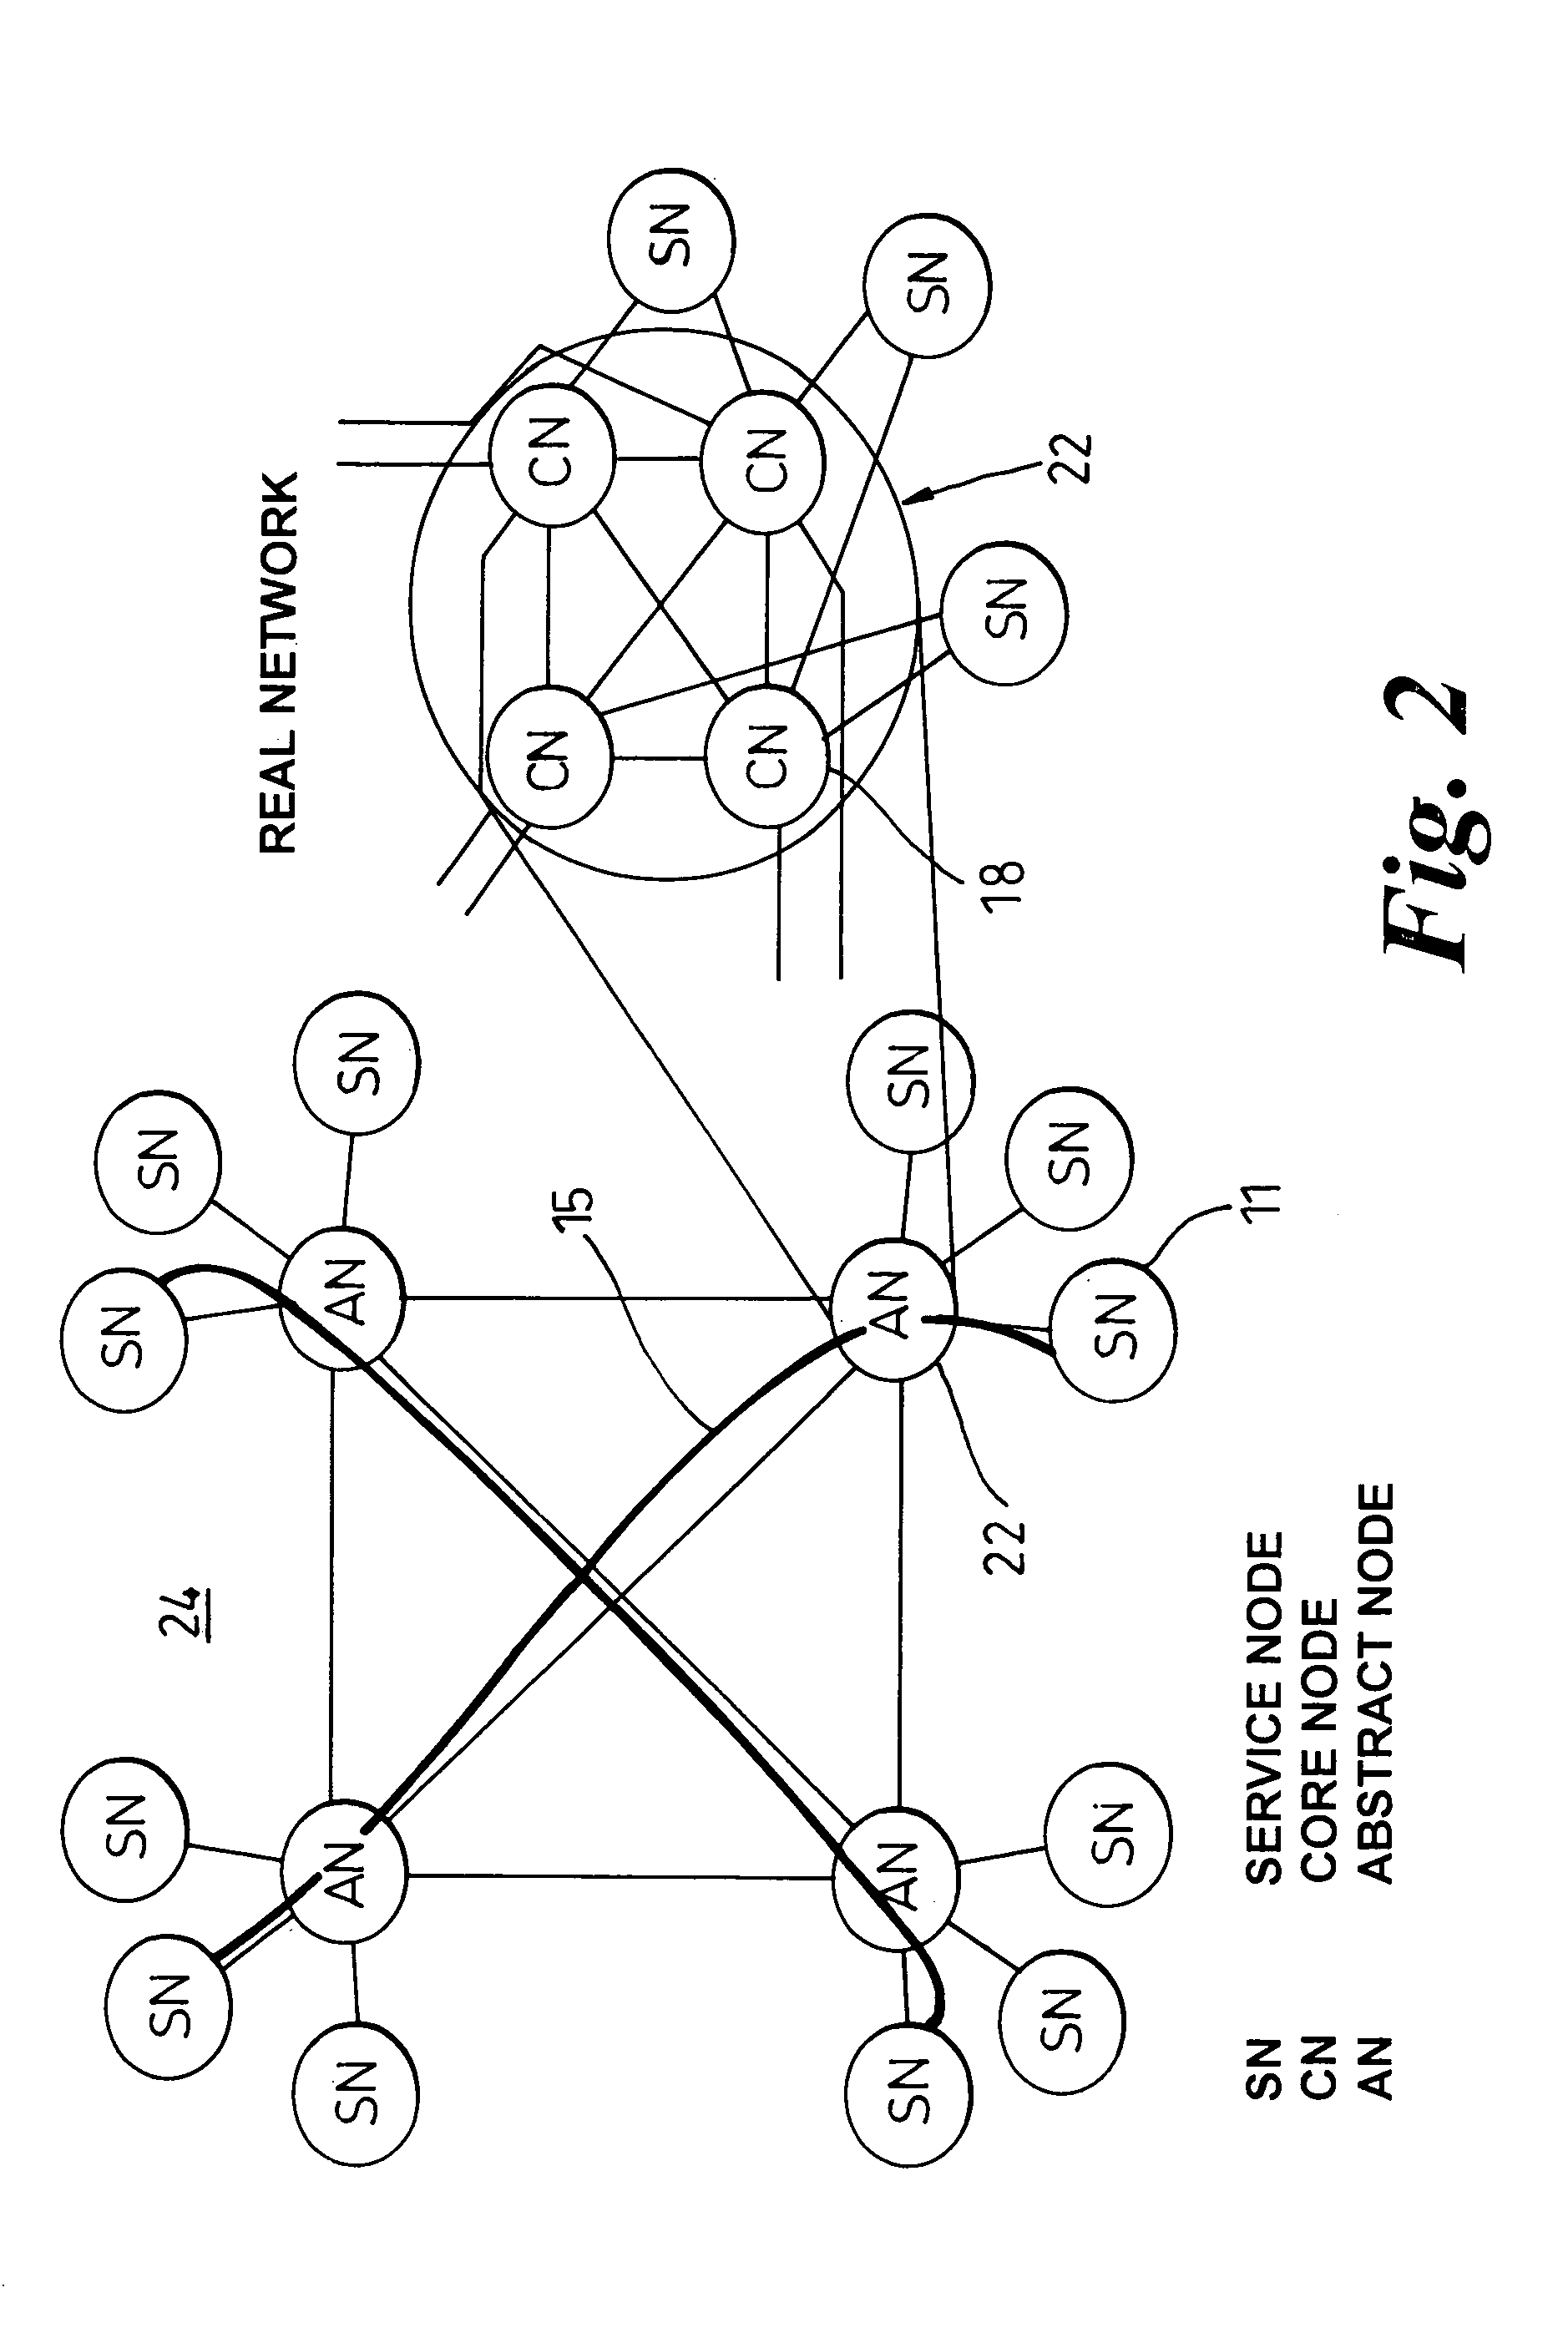 Communications network